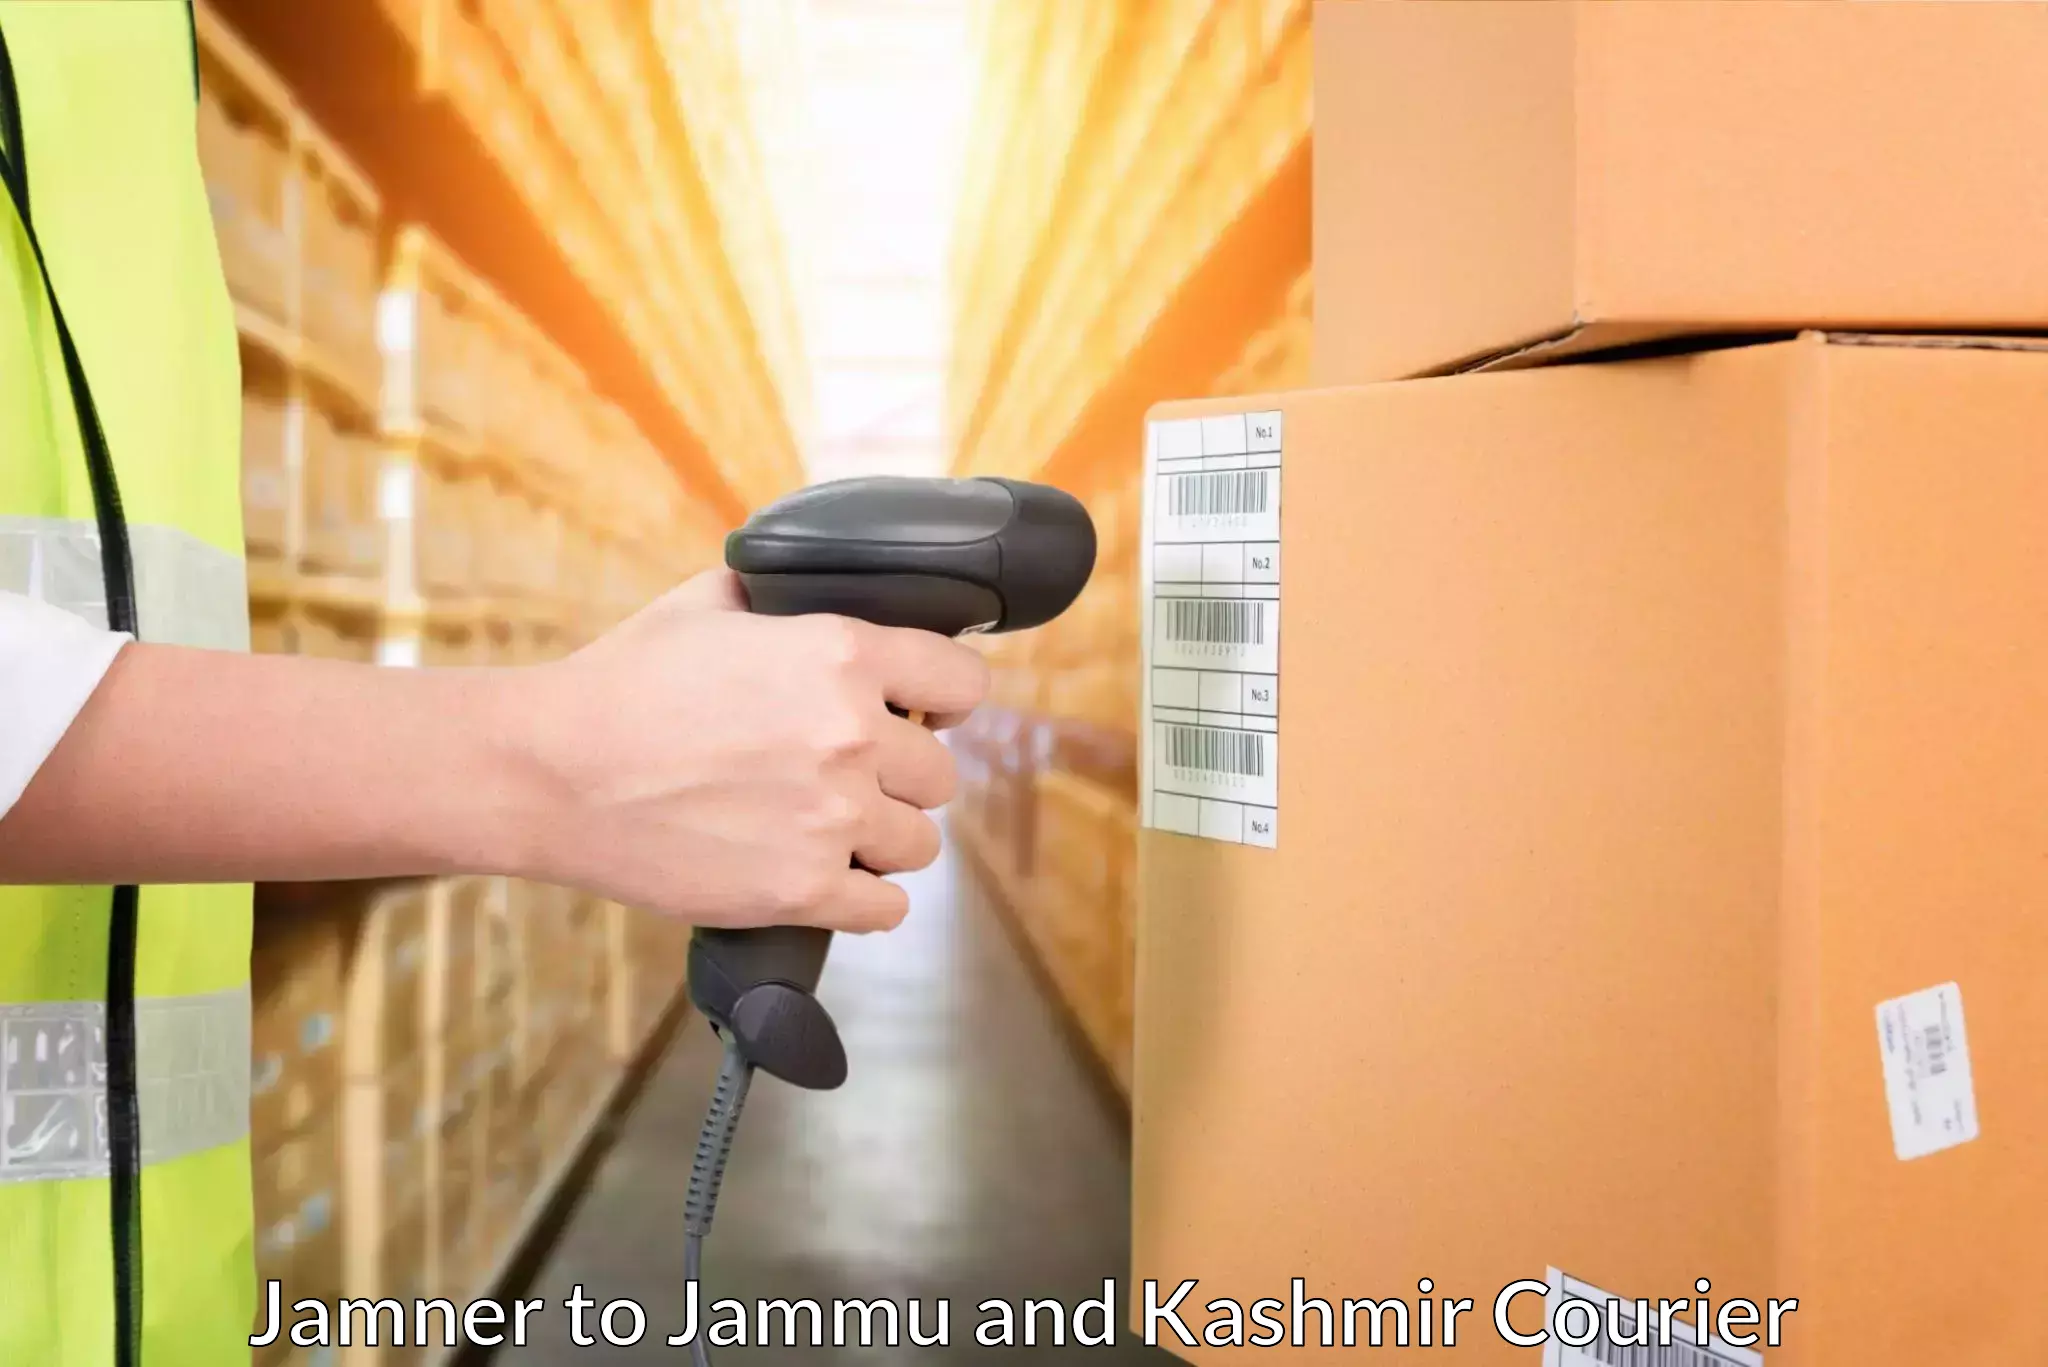 International parcel service Jamner to Jammu